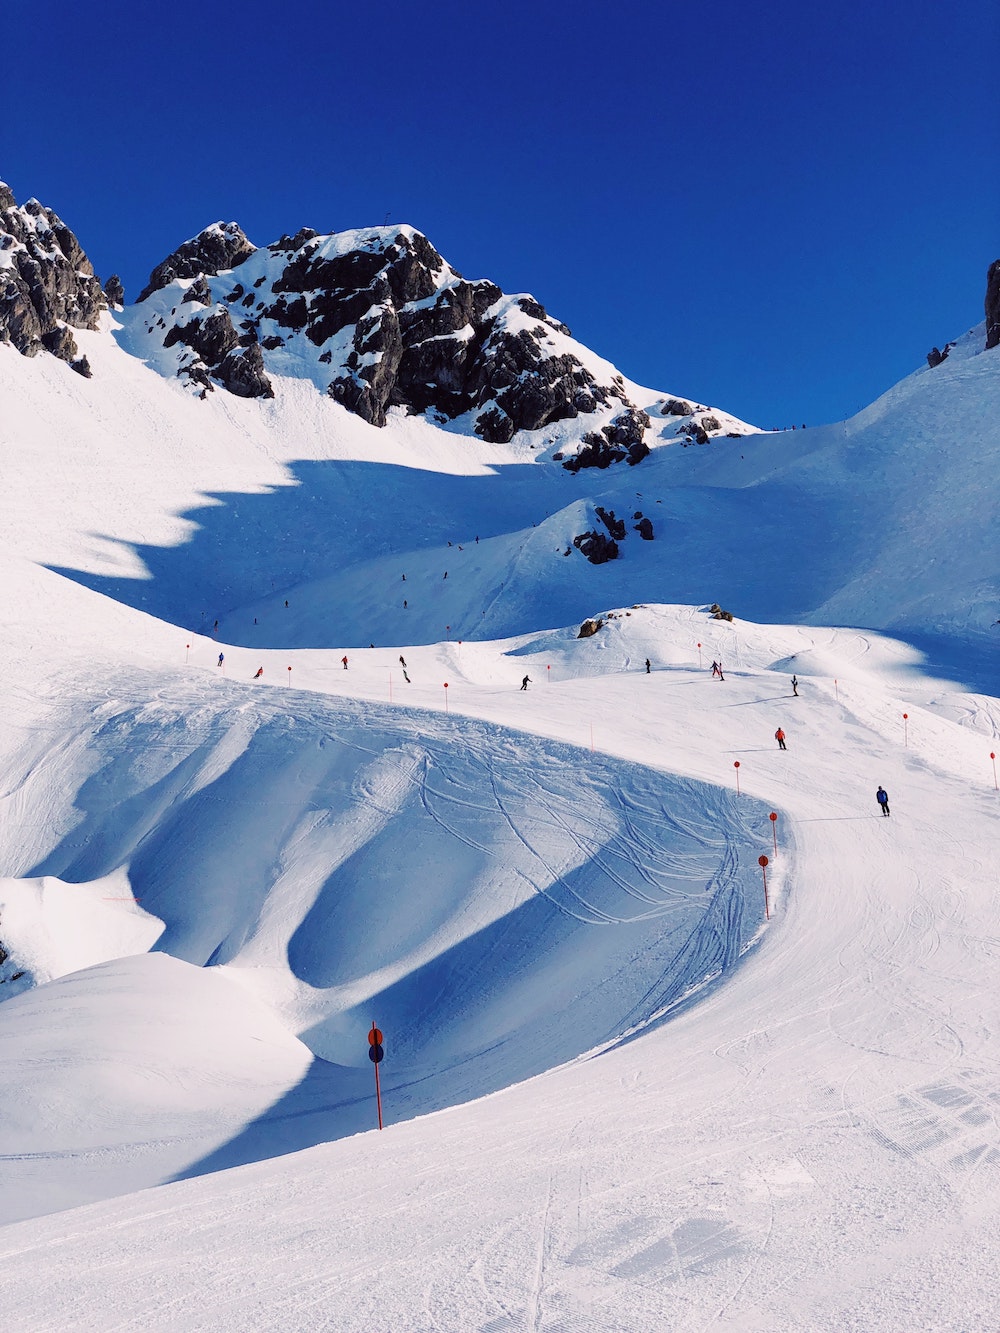 St Anton skiing this winter